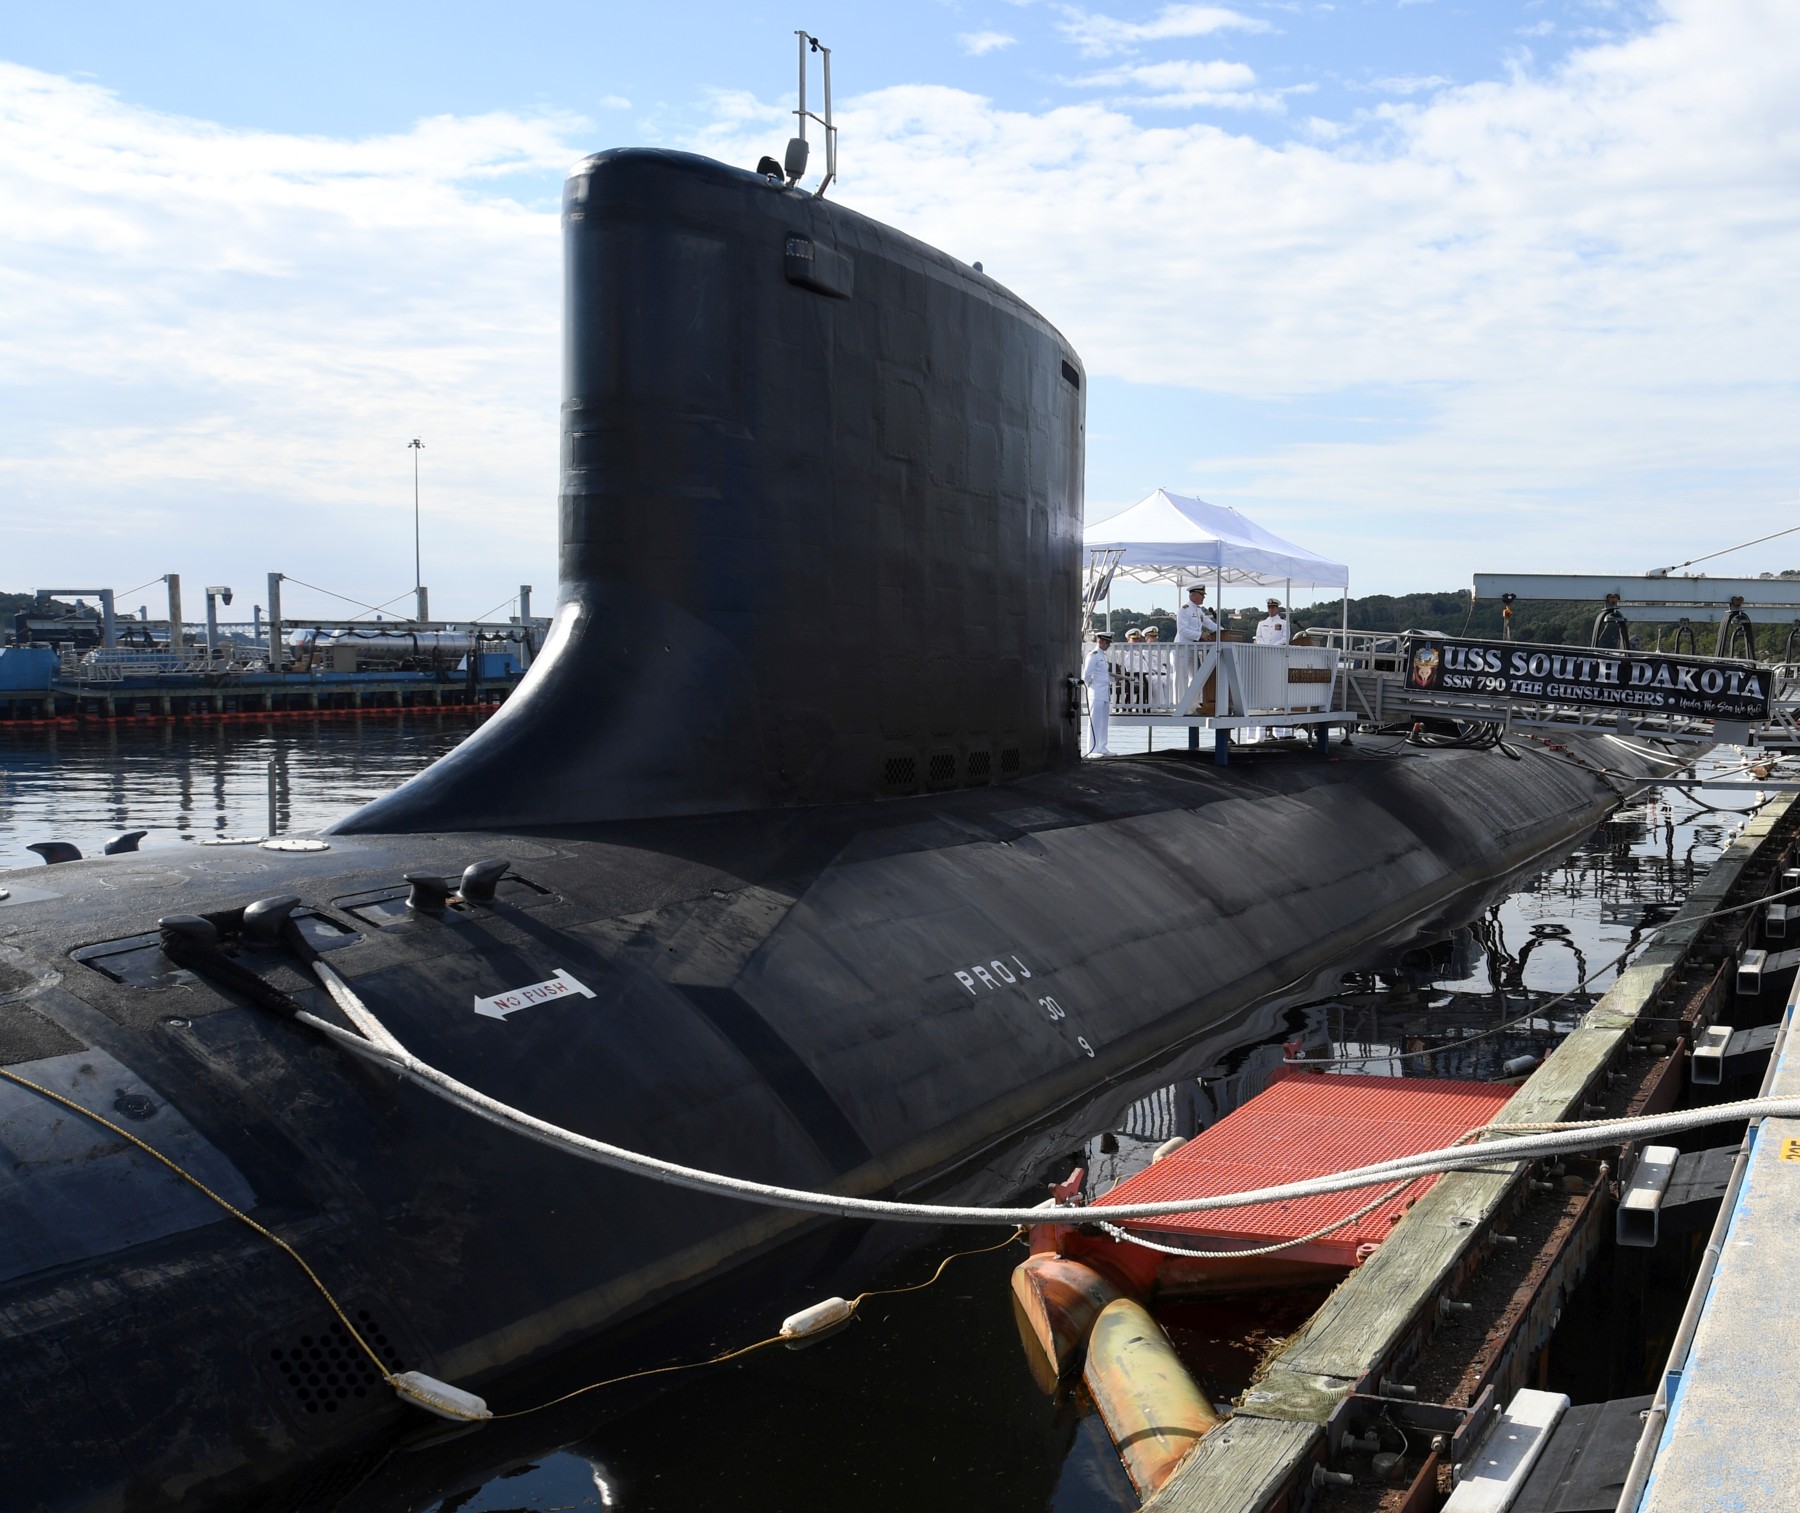 ssn-790 uss south dakota virginia class attack submarine us navy 10 subase new london groton